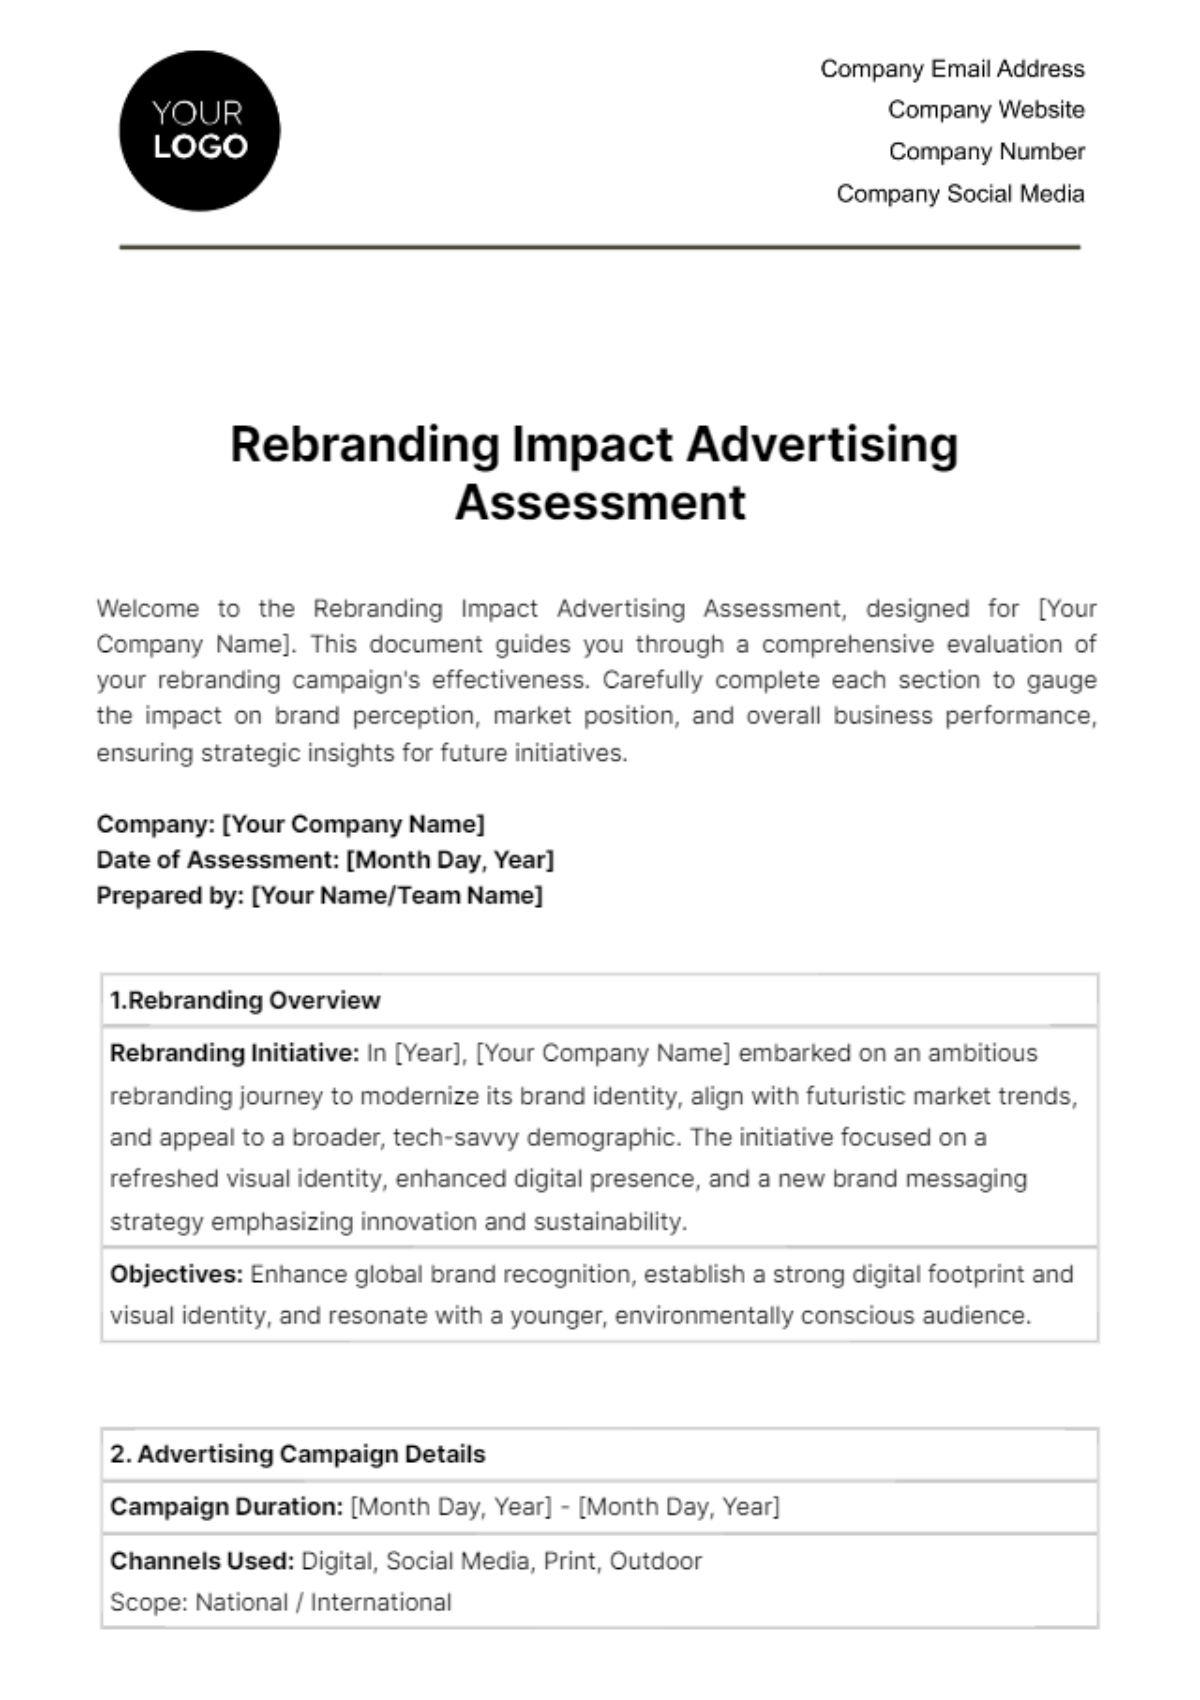 Rebranding Impact Advertising Assessment Template